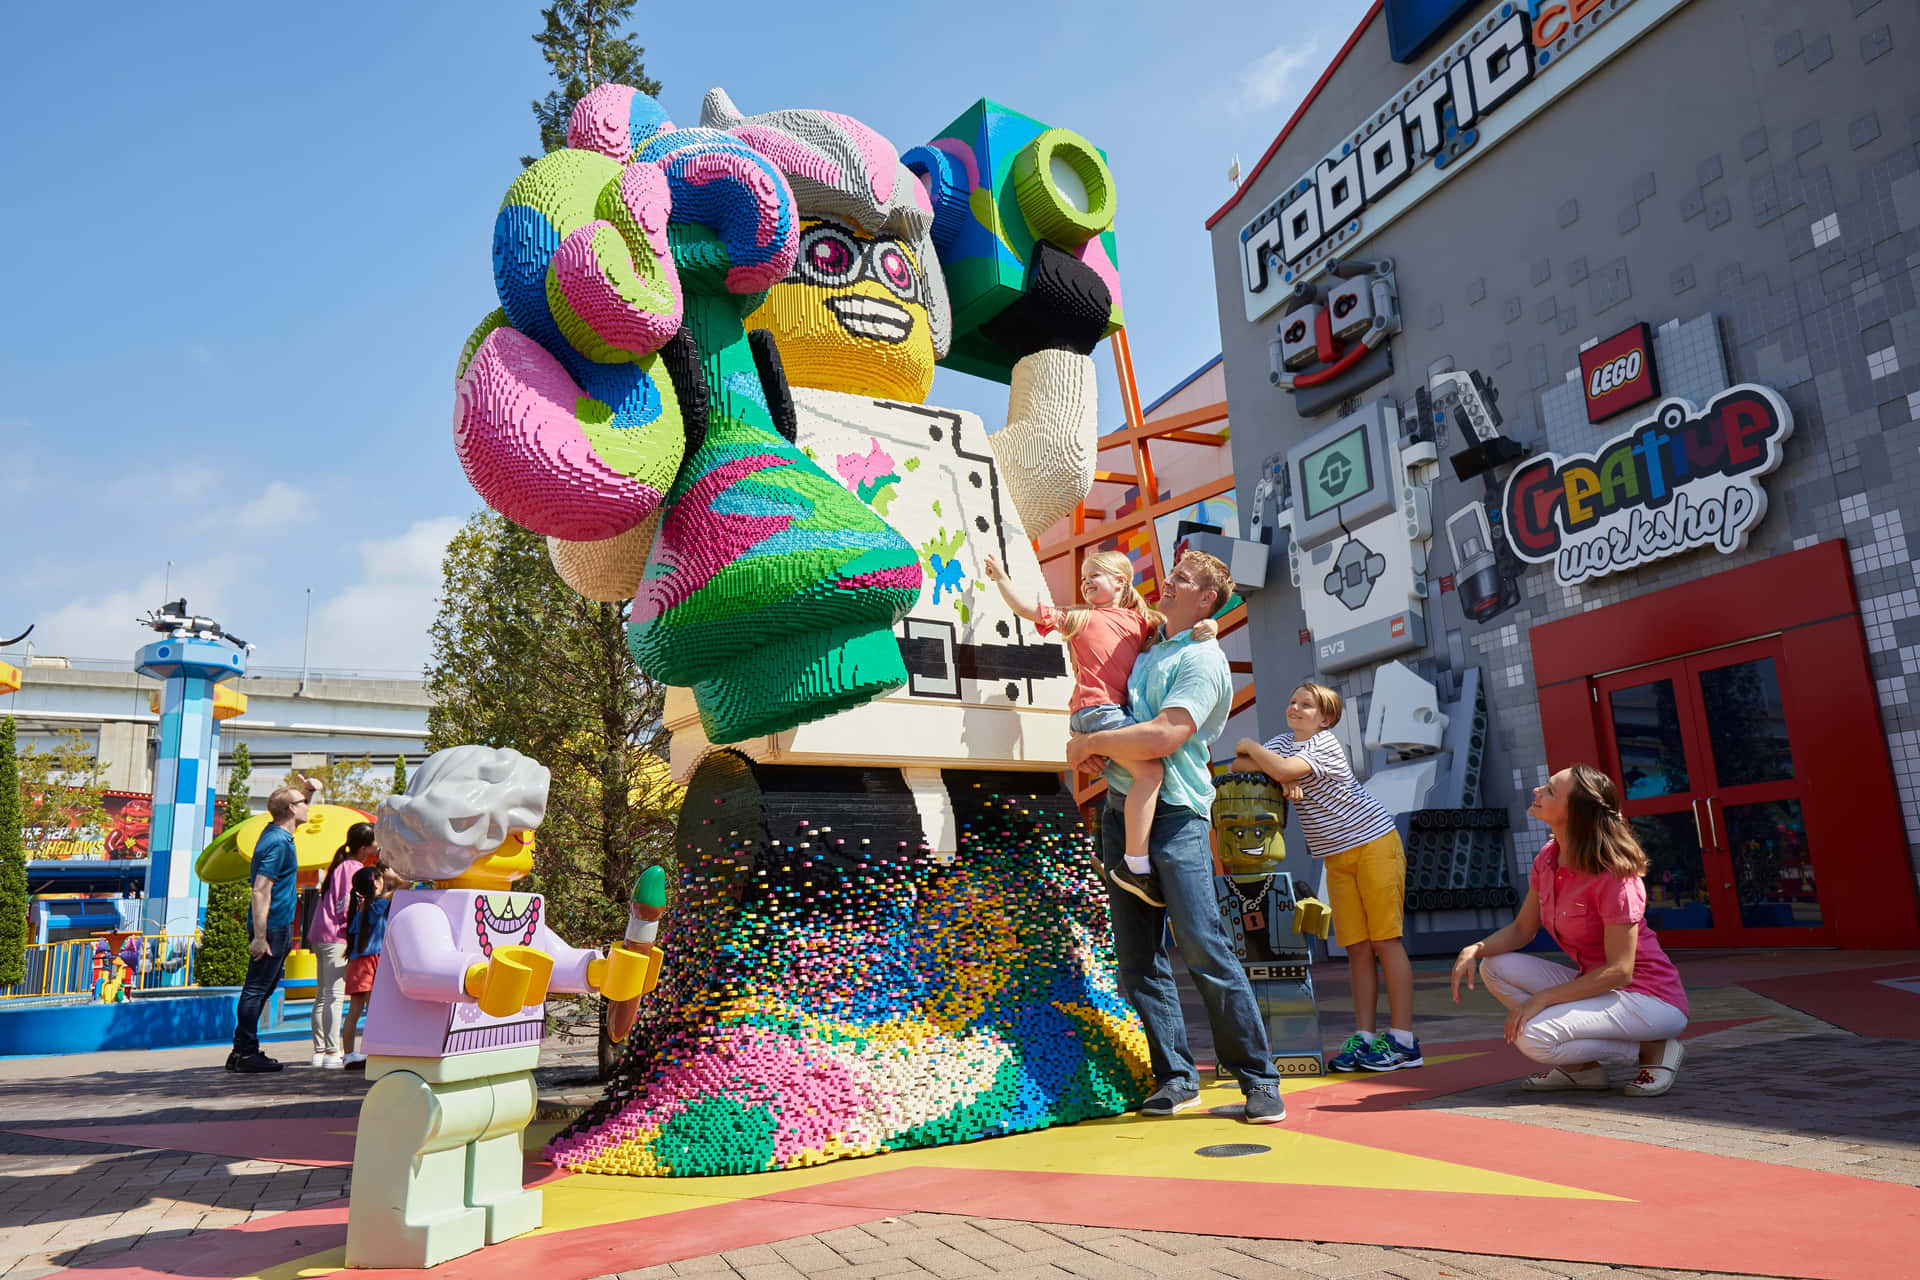 Enjoy an Adventurous Day-Out at Legoland